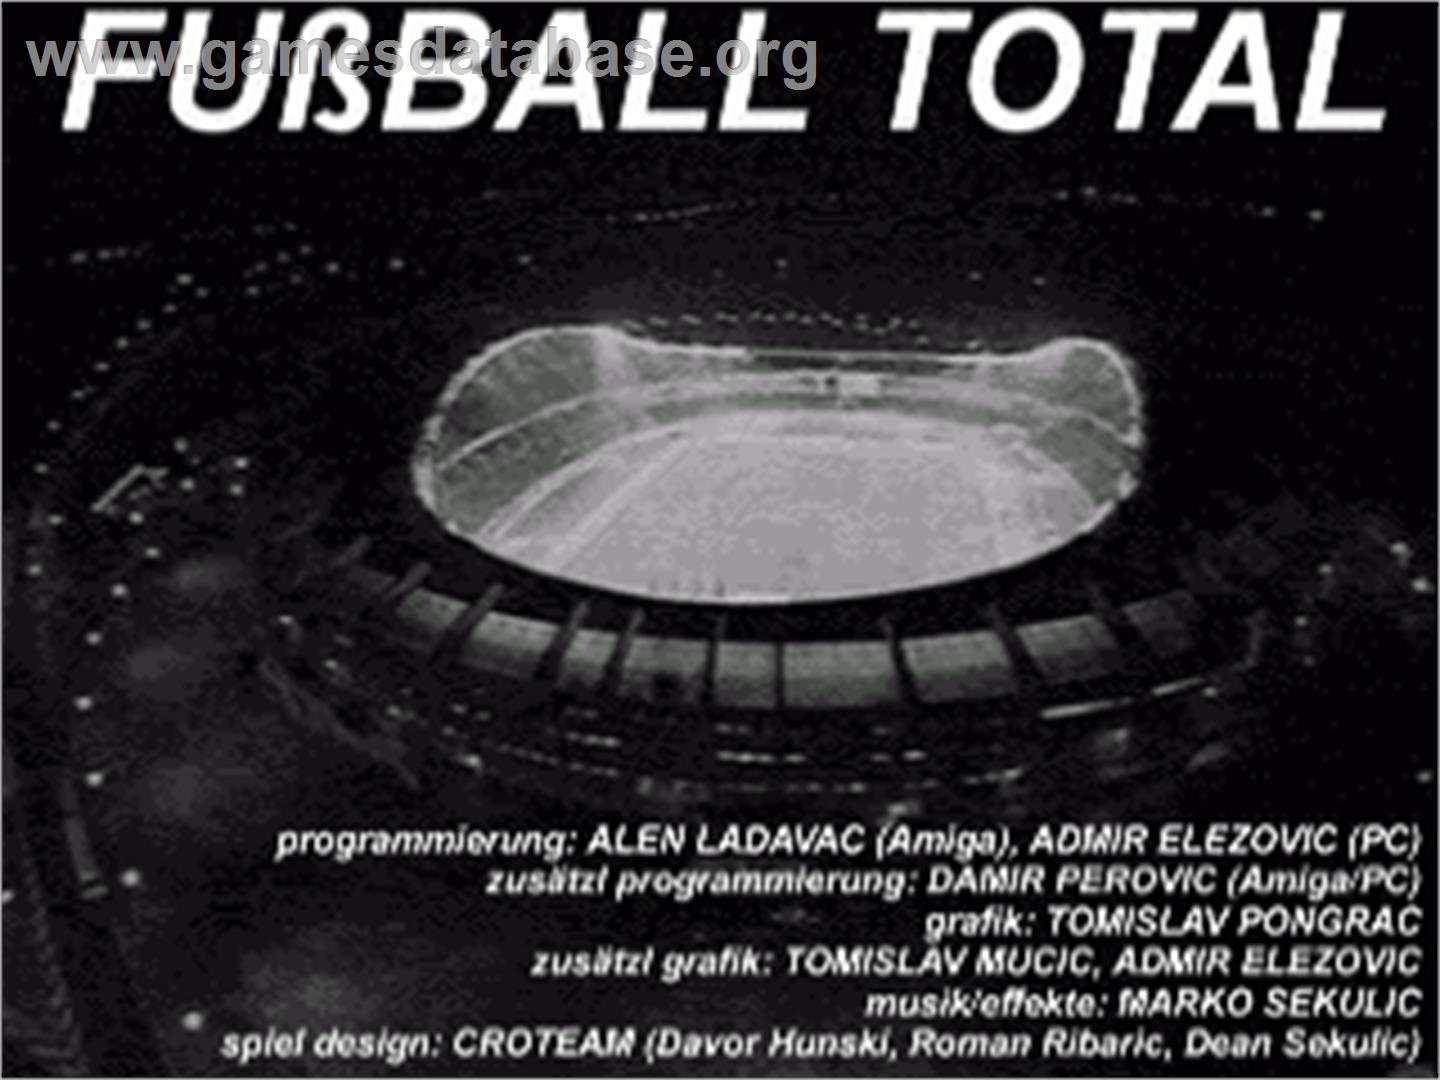 Football Glory - Commodore Amiga - Artwork - Title Screen